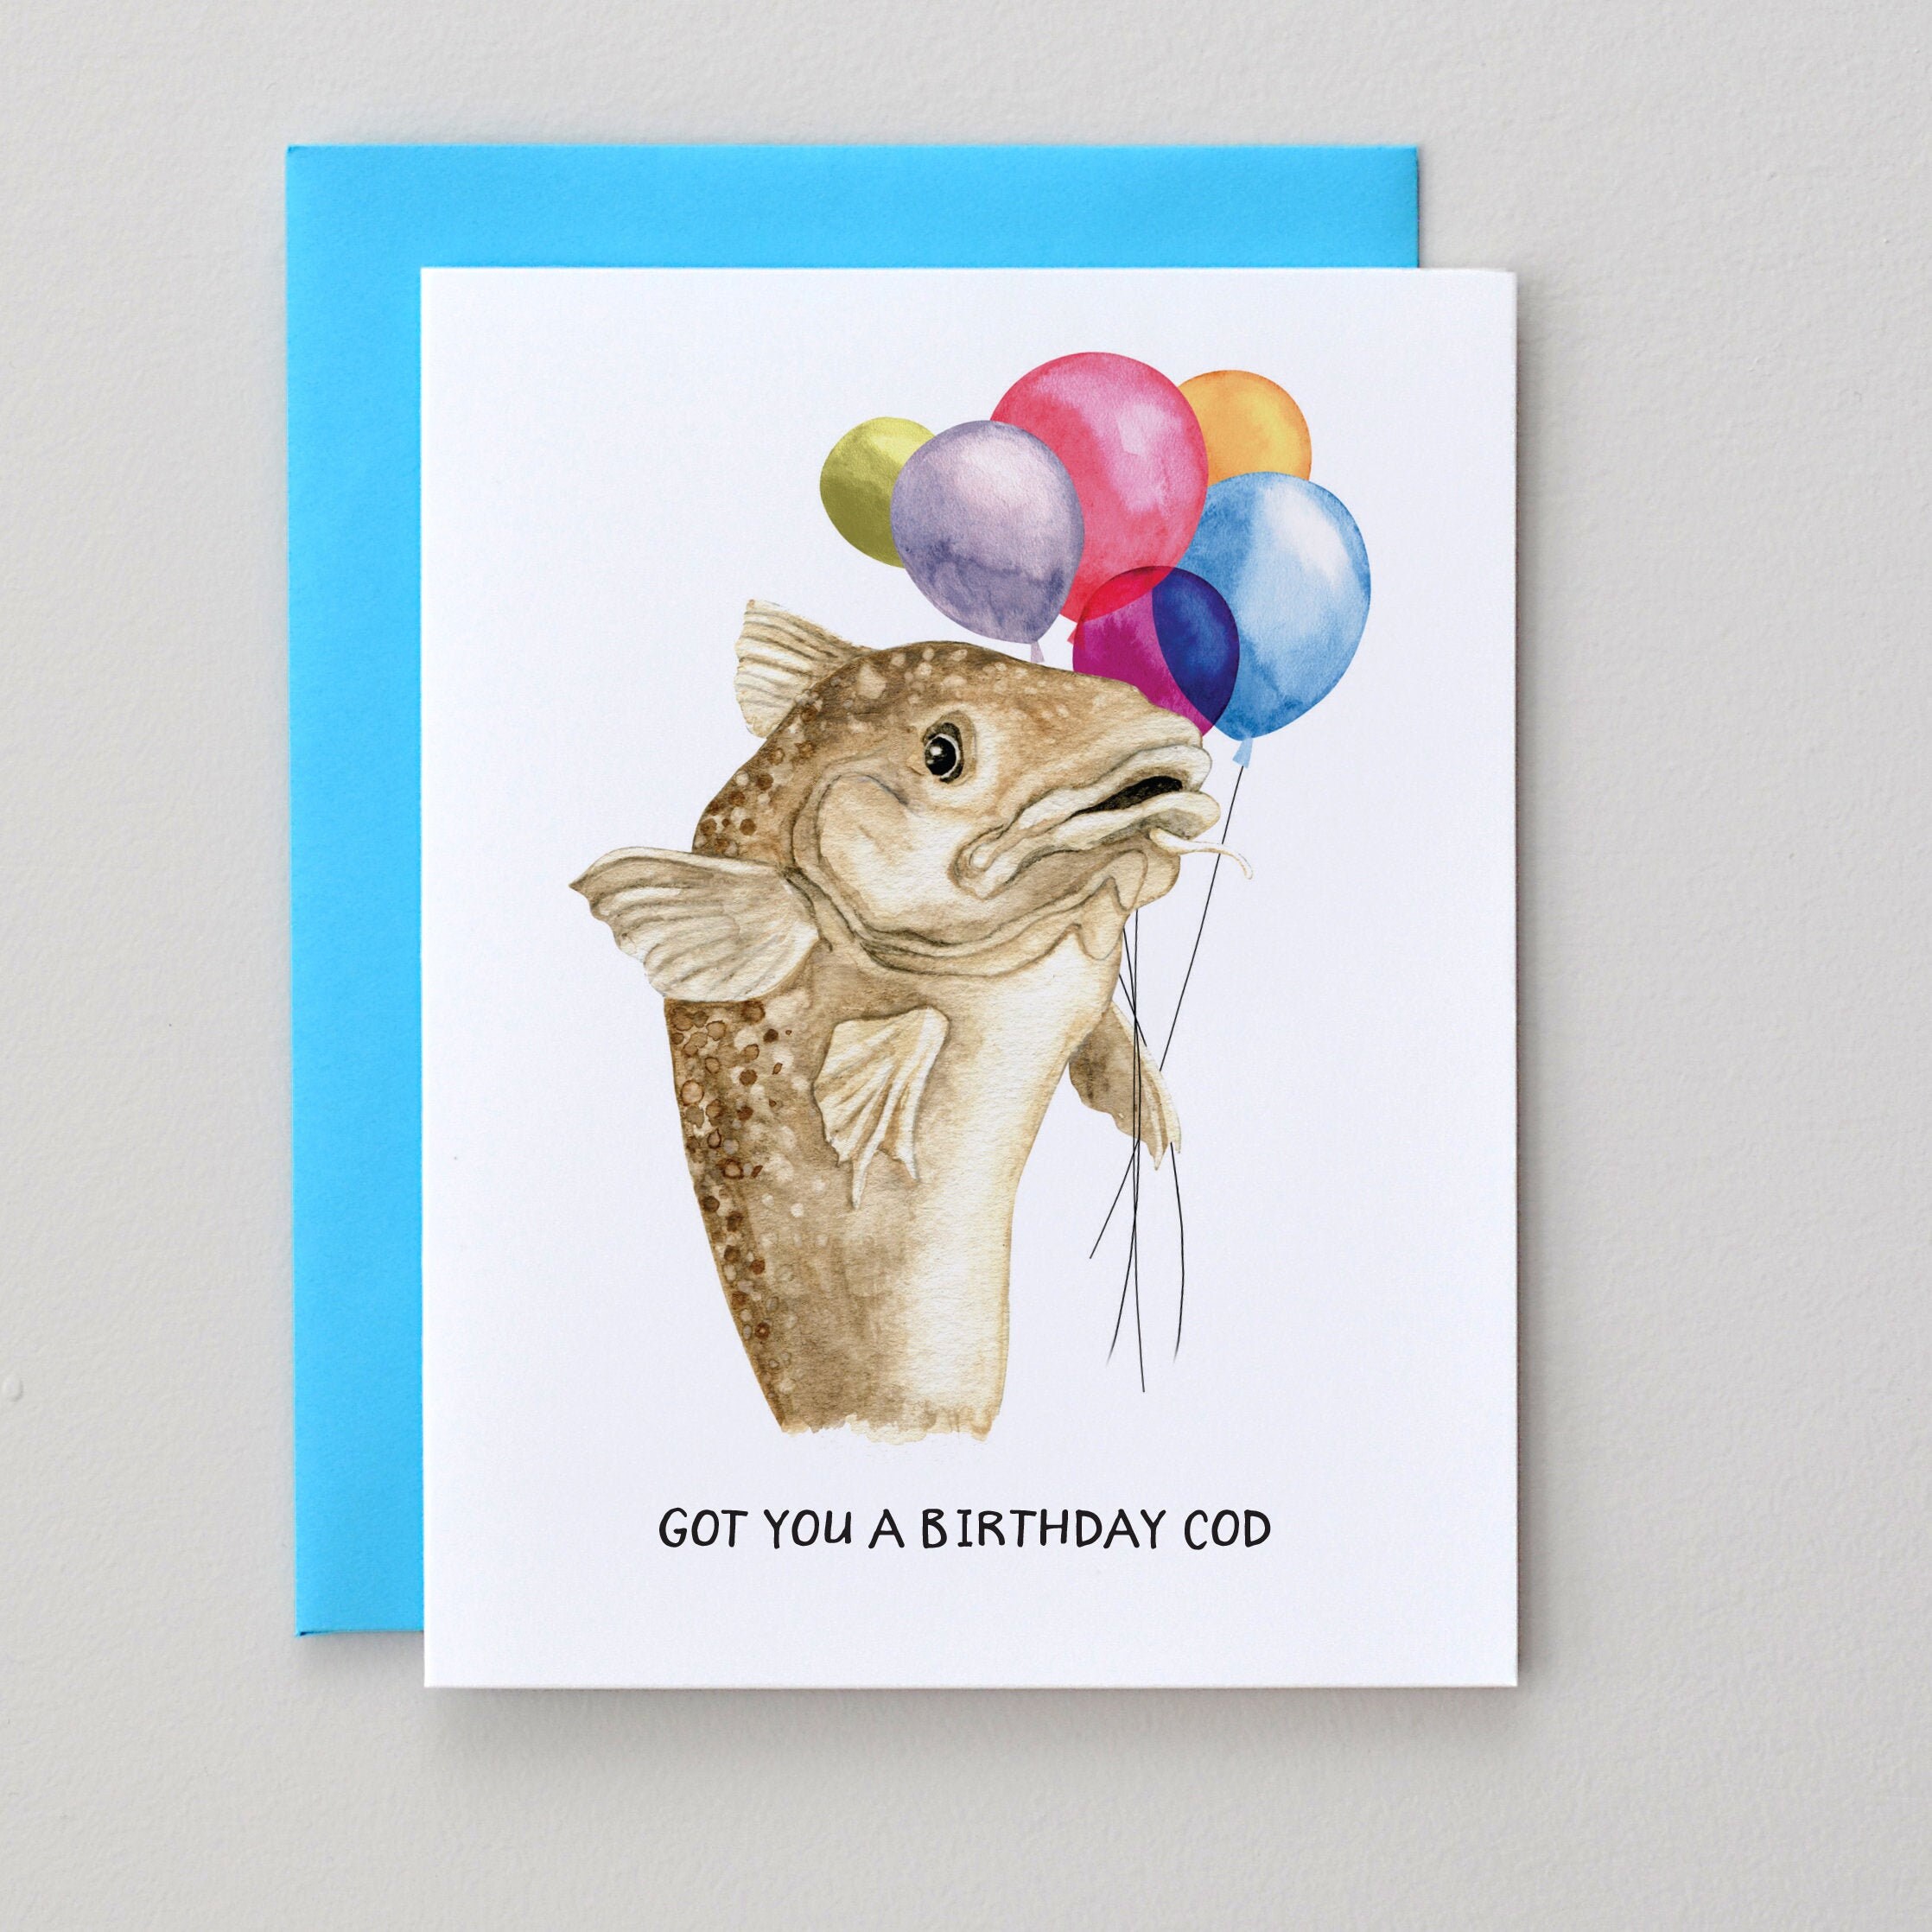 birthday-cod-funny-birthday-card-blank-inside-etsy